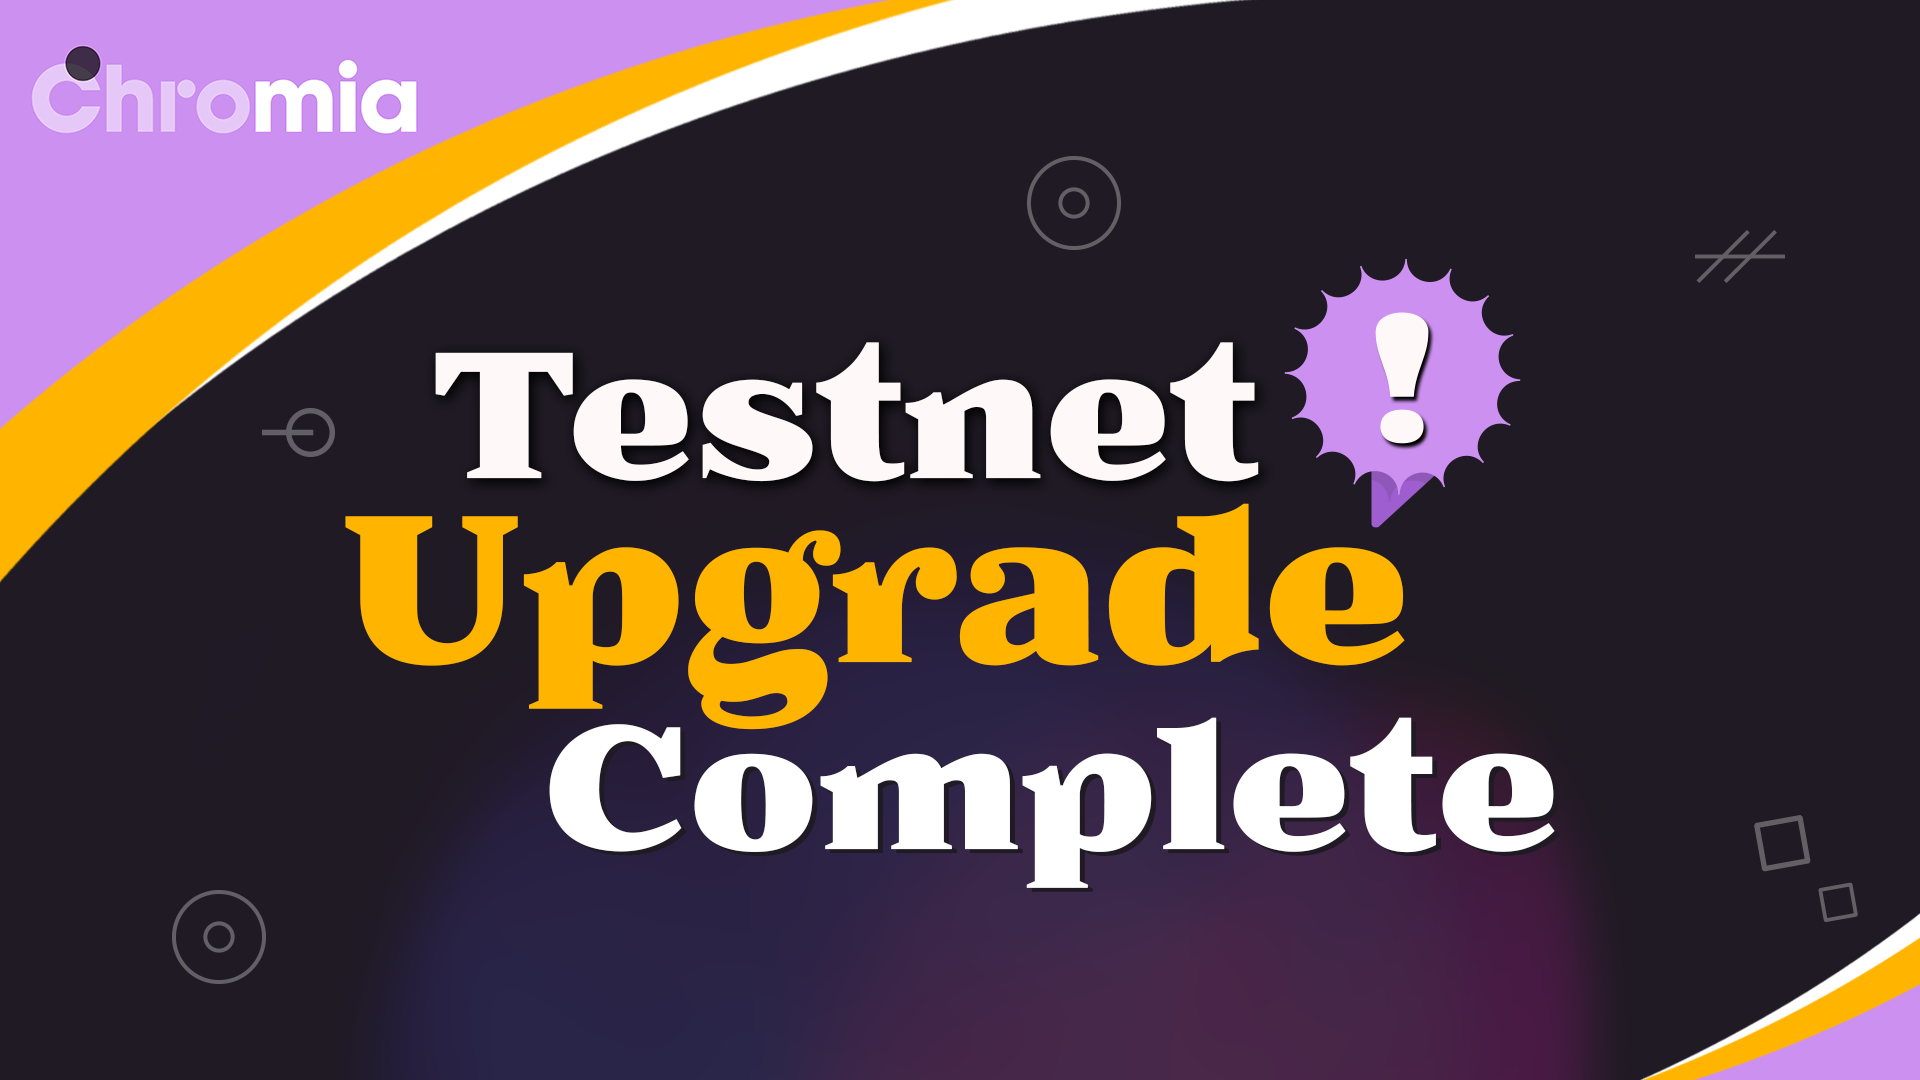 Chromia Testnet Upgrade Complete!